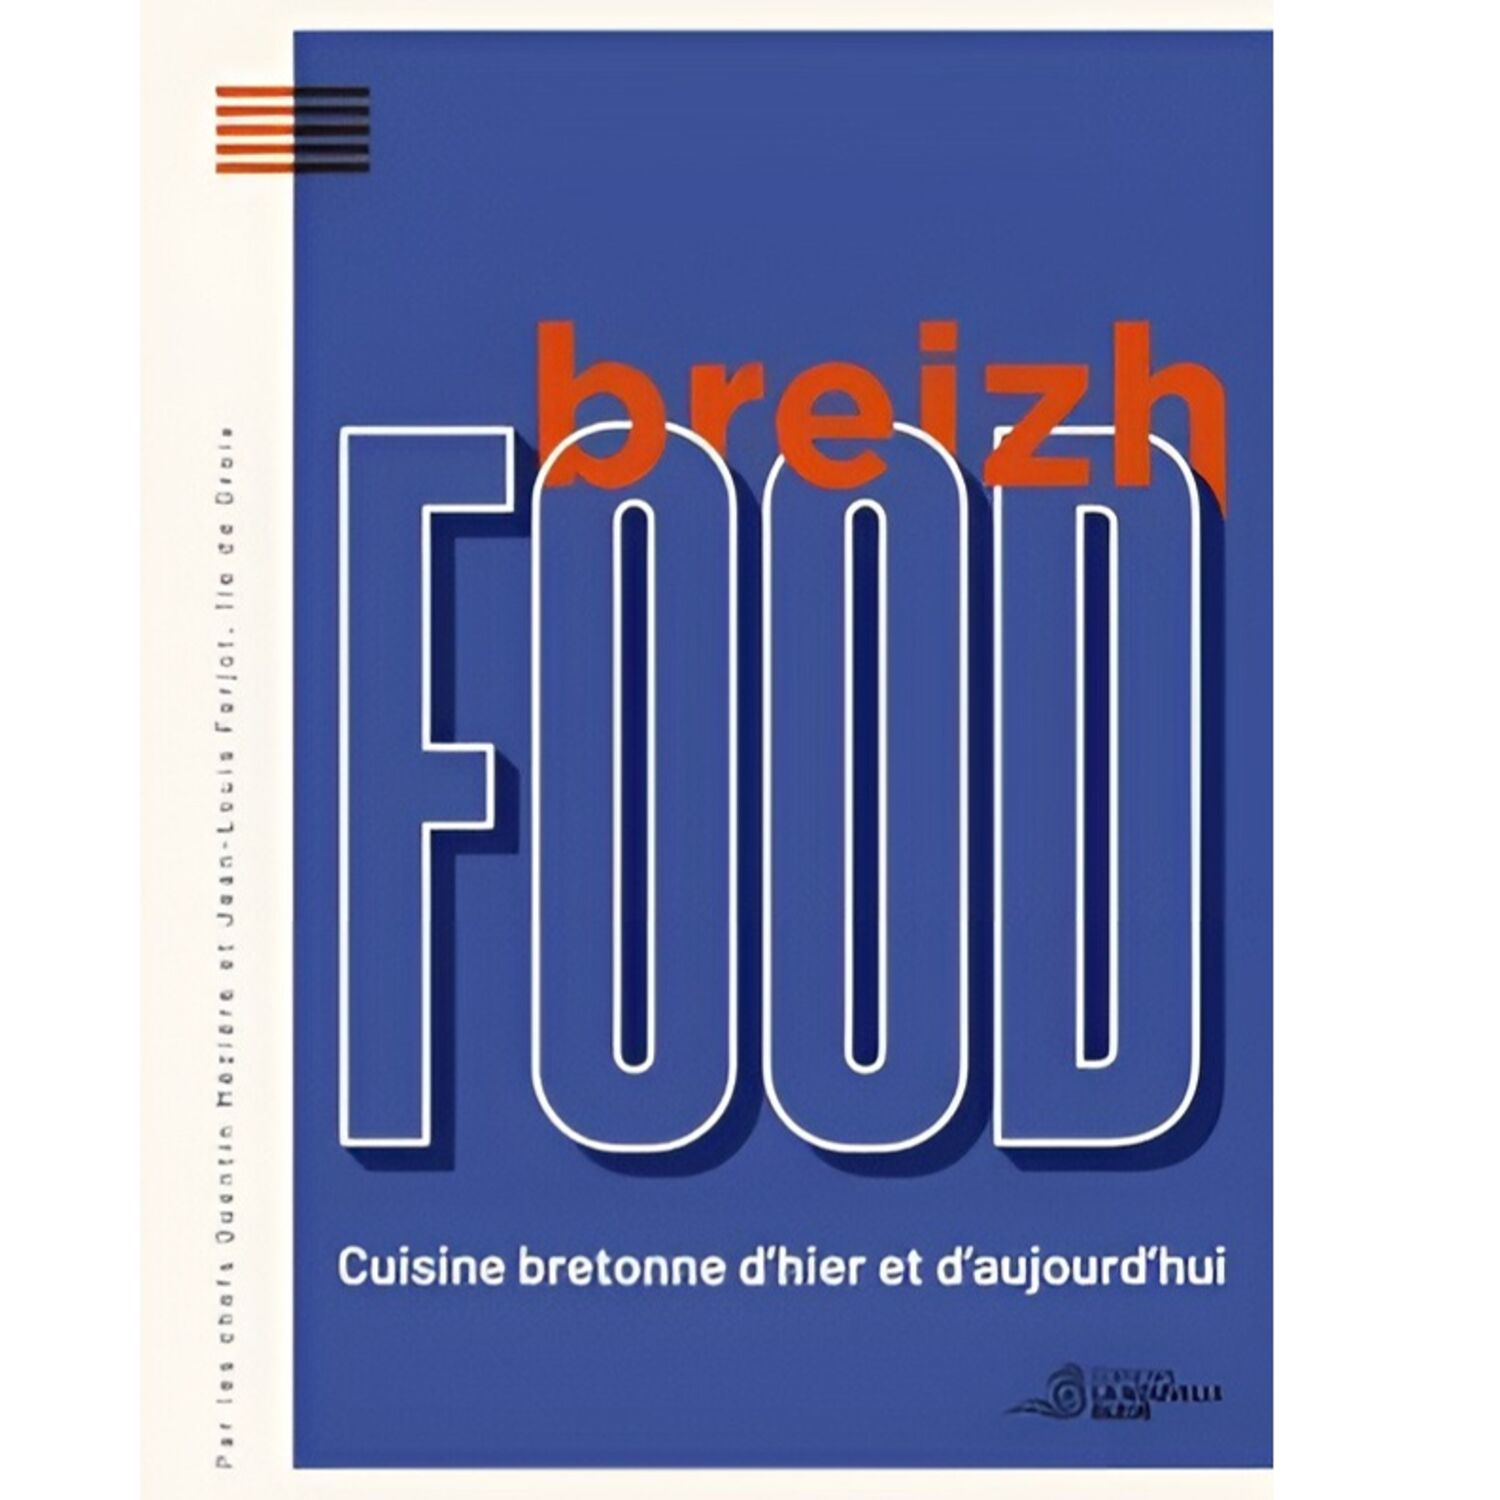 Livre: Breizh Food, cuisine bretonne d'hier et d'aujourd'hui